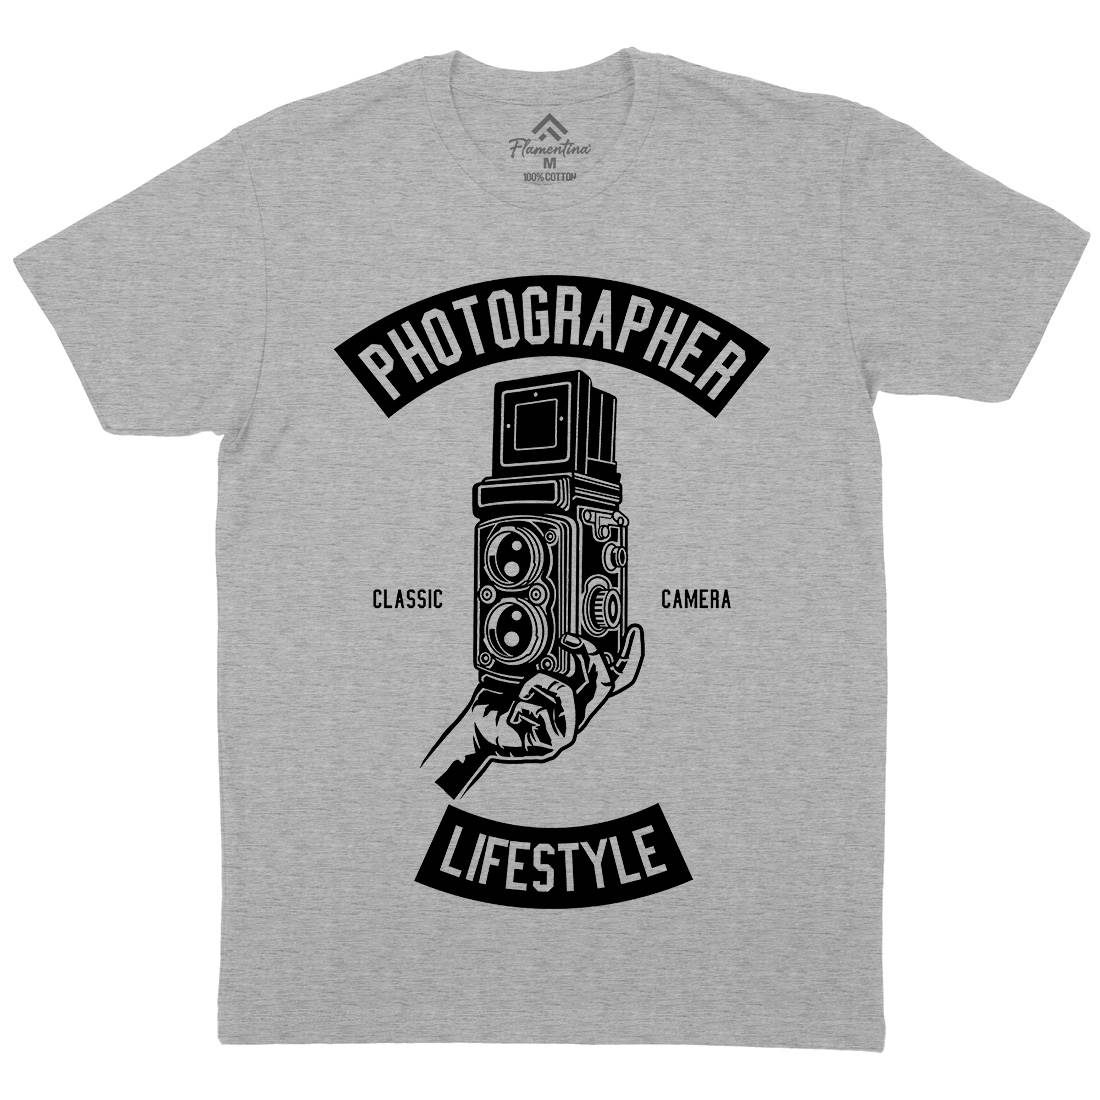 Photographer Lifestyle Mens Crew Neck T-Shirt Media B597